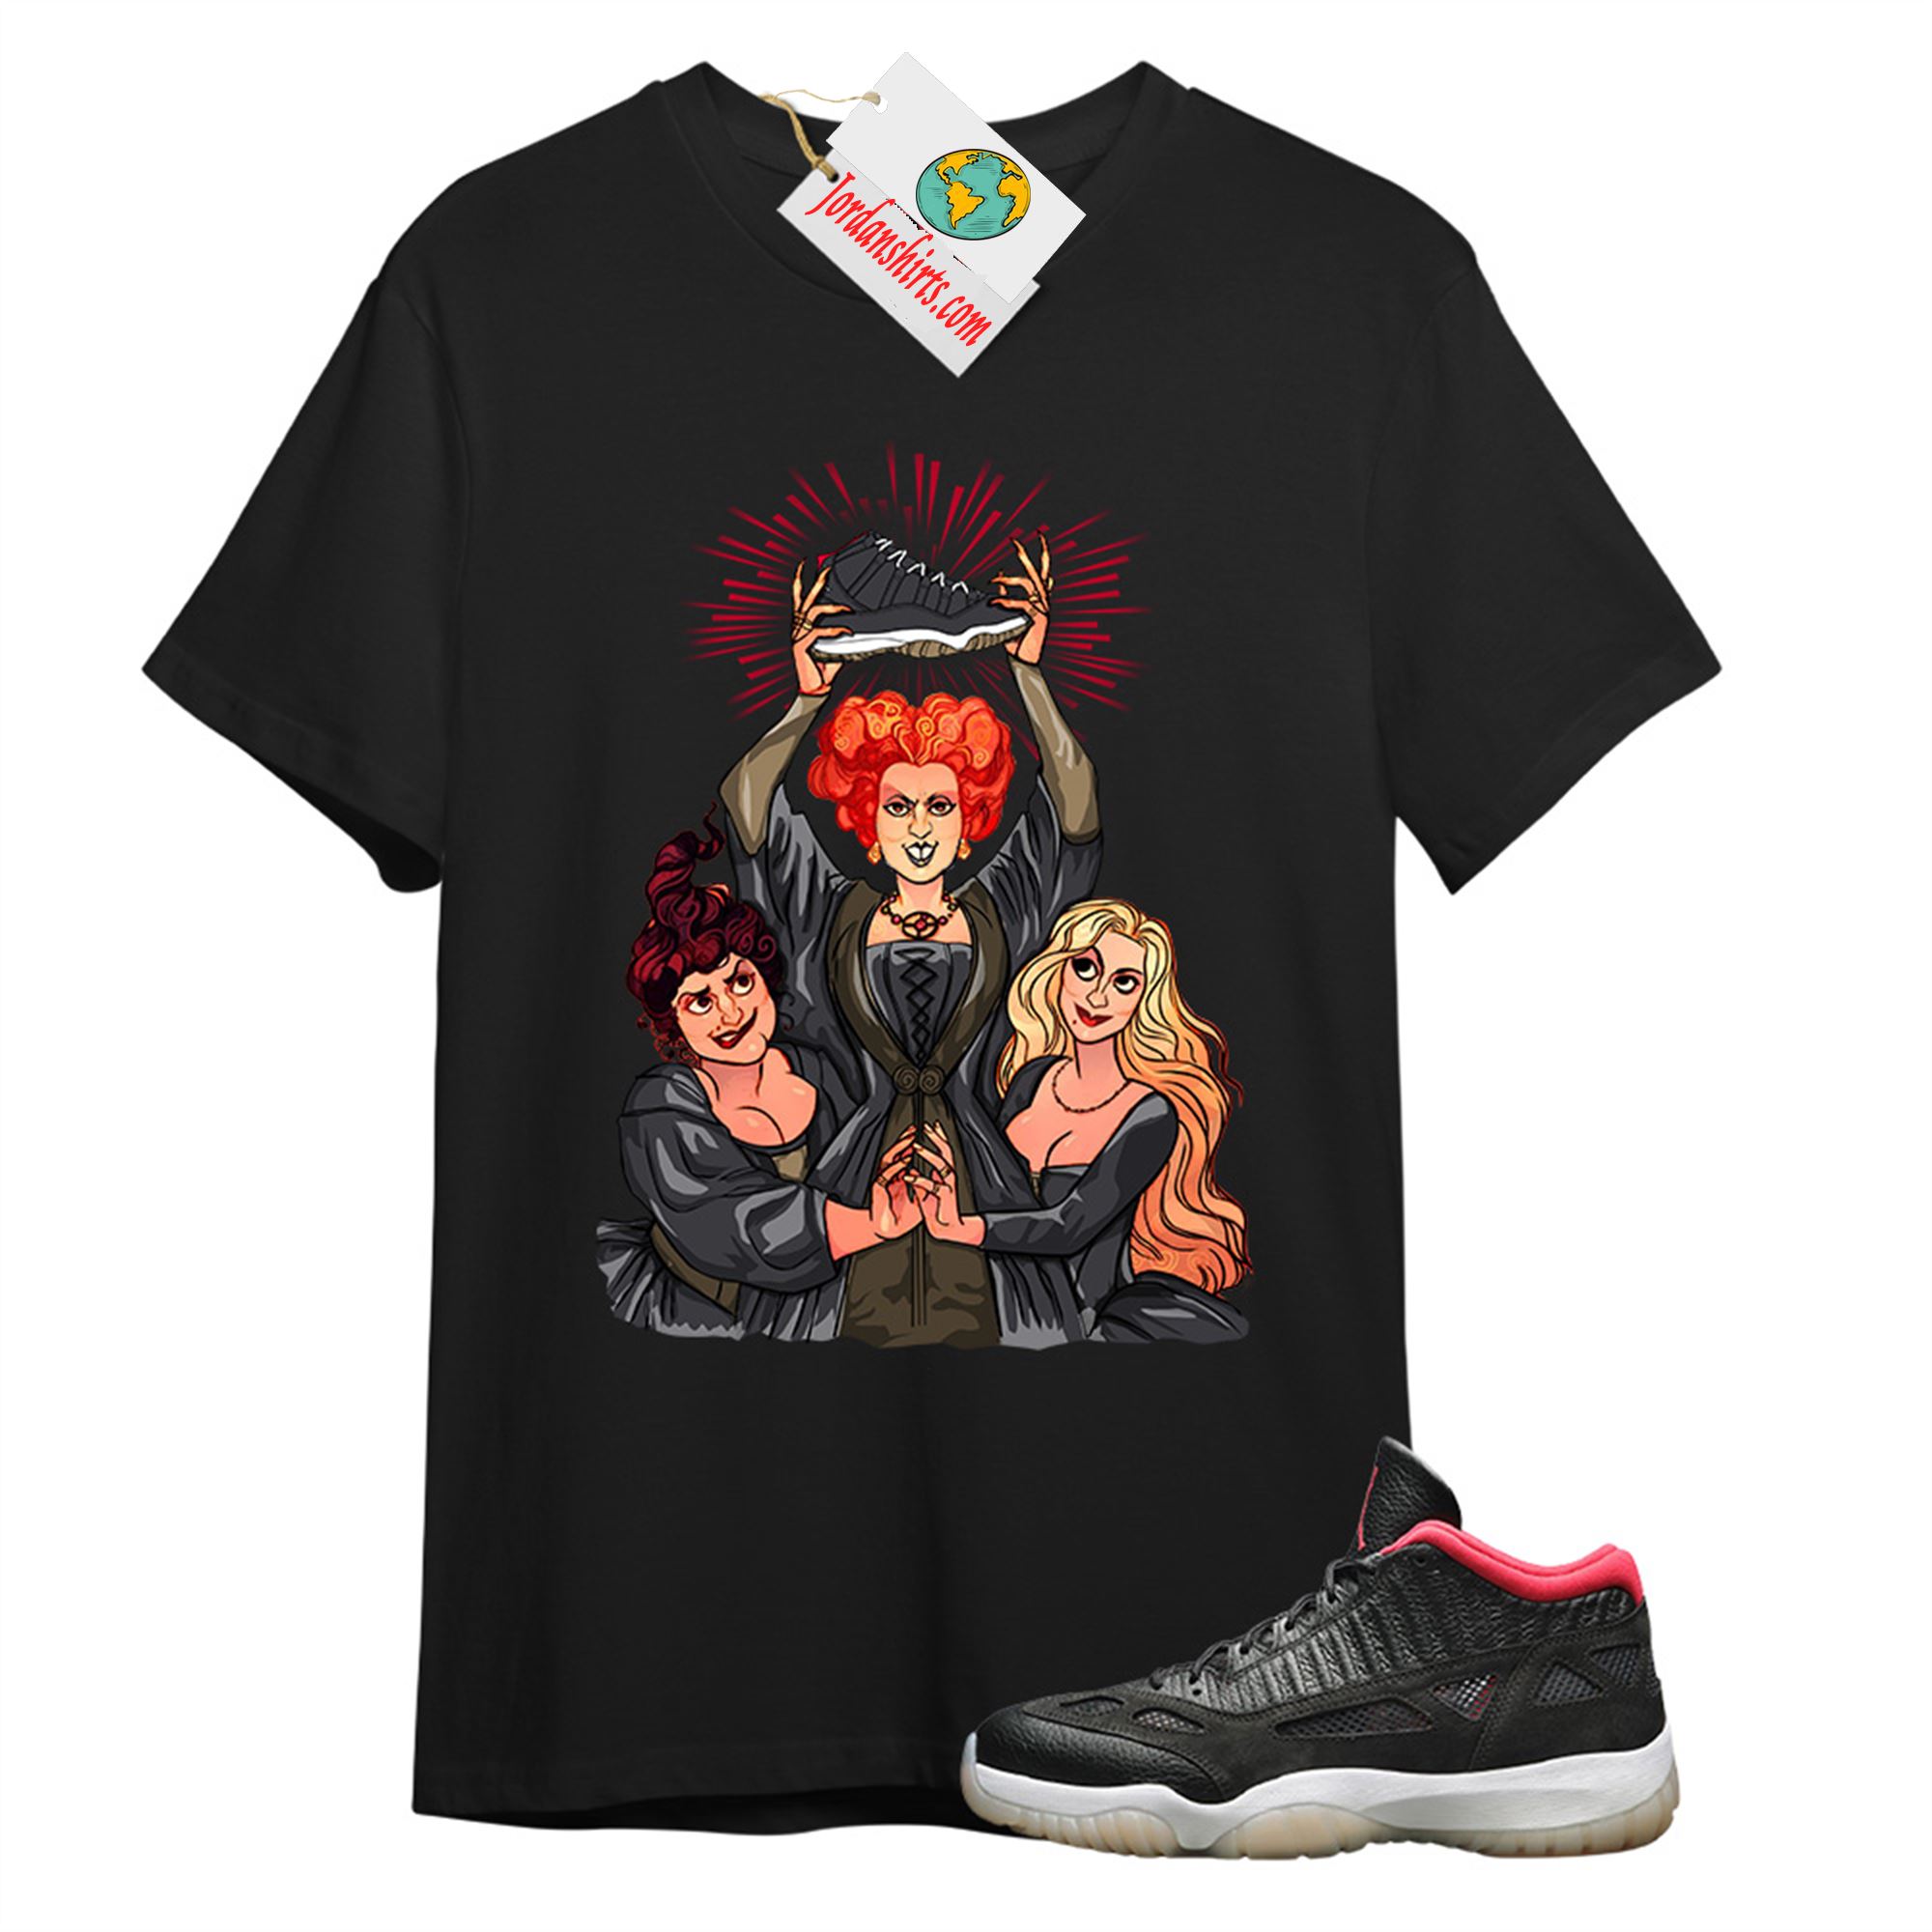 Jordan 11 Shirt, Hocus Pocus Three Witches Black T-shirt Air Jordan 11 Bred 11s Size Up To 5xl